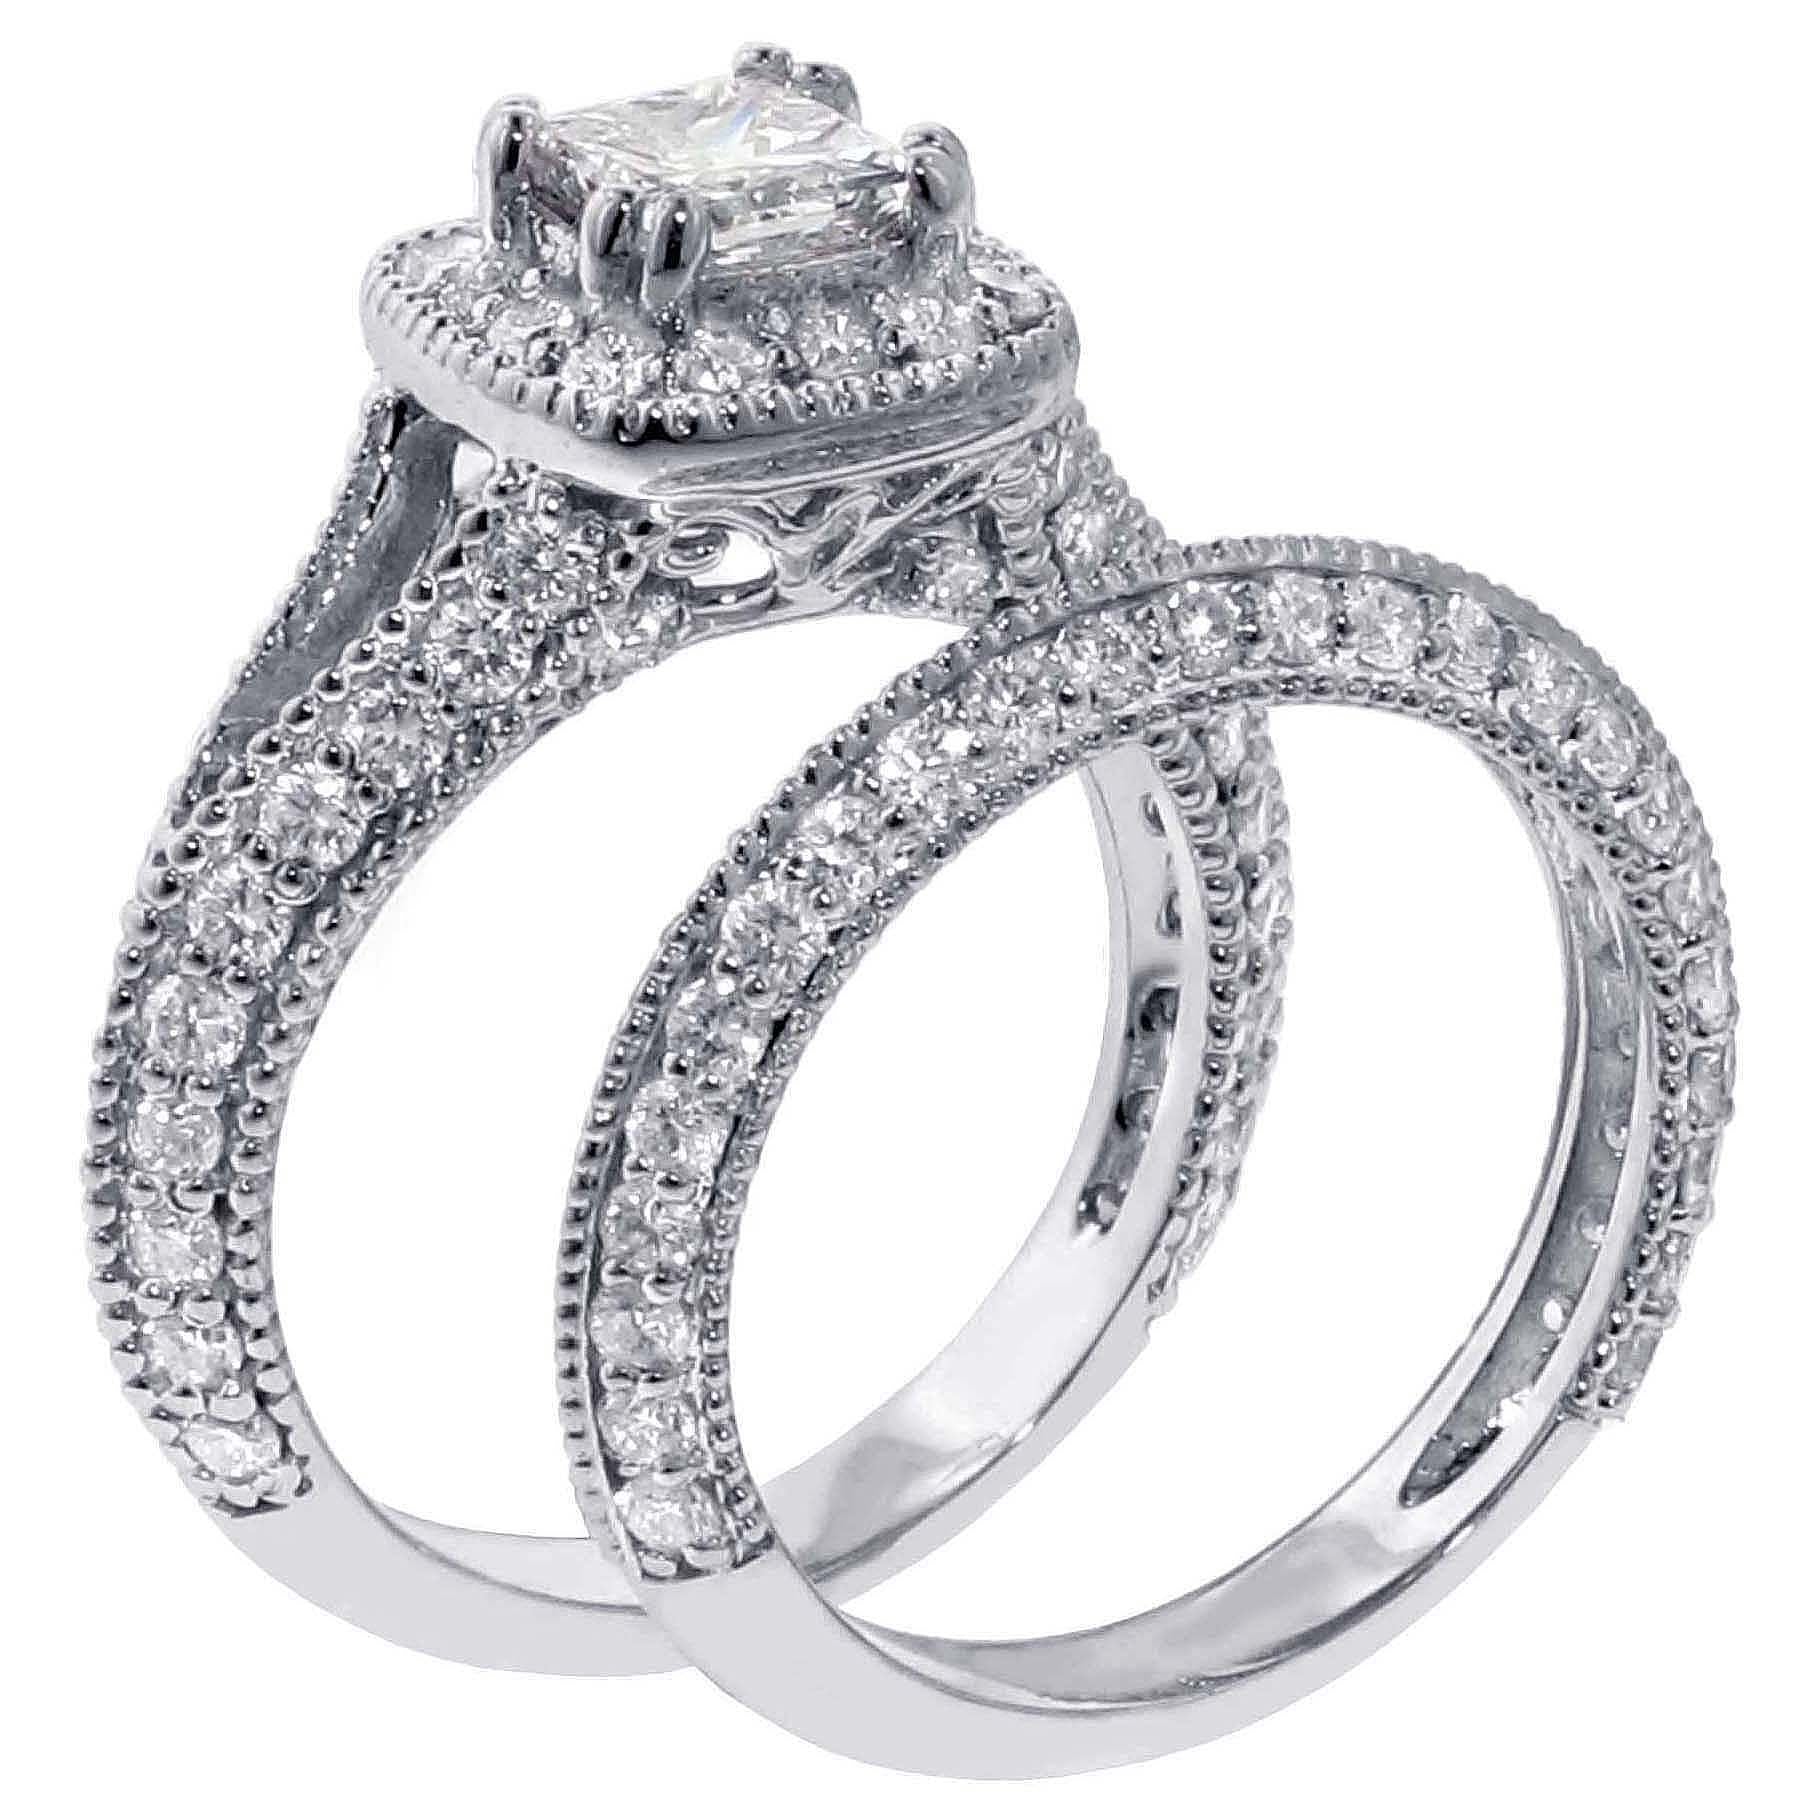 2.40 CT Halo Princess Cut Diamond Engagement Bridal Set in 14k White Gold